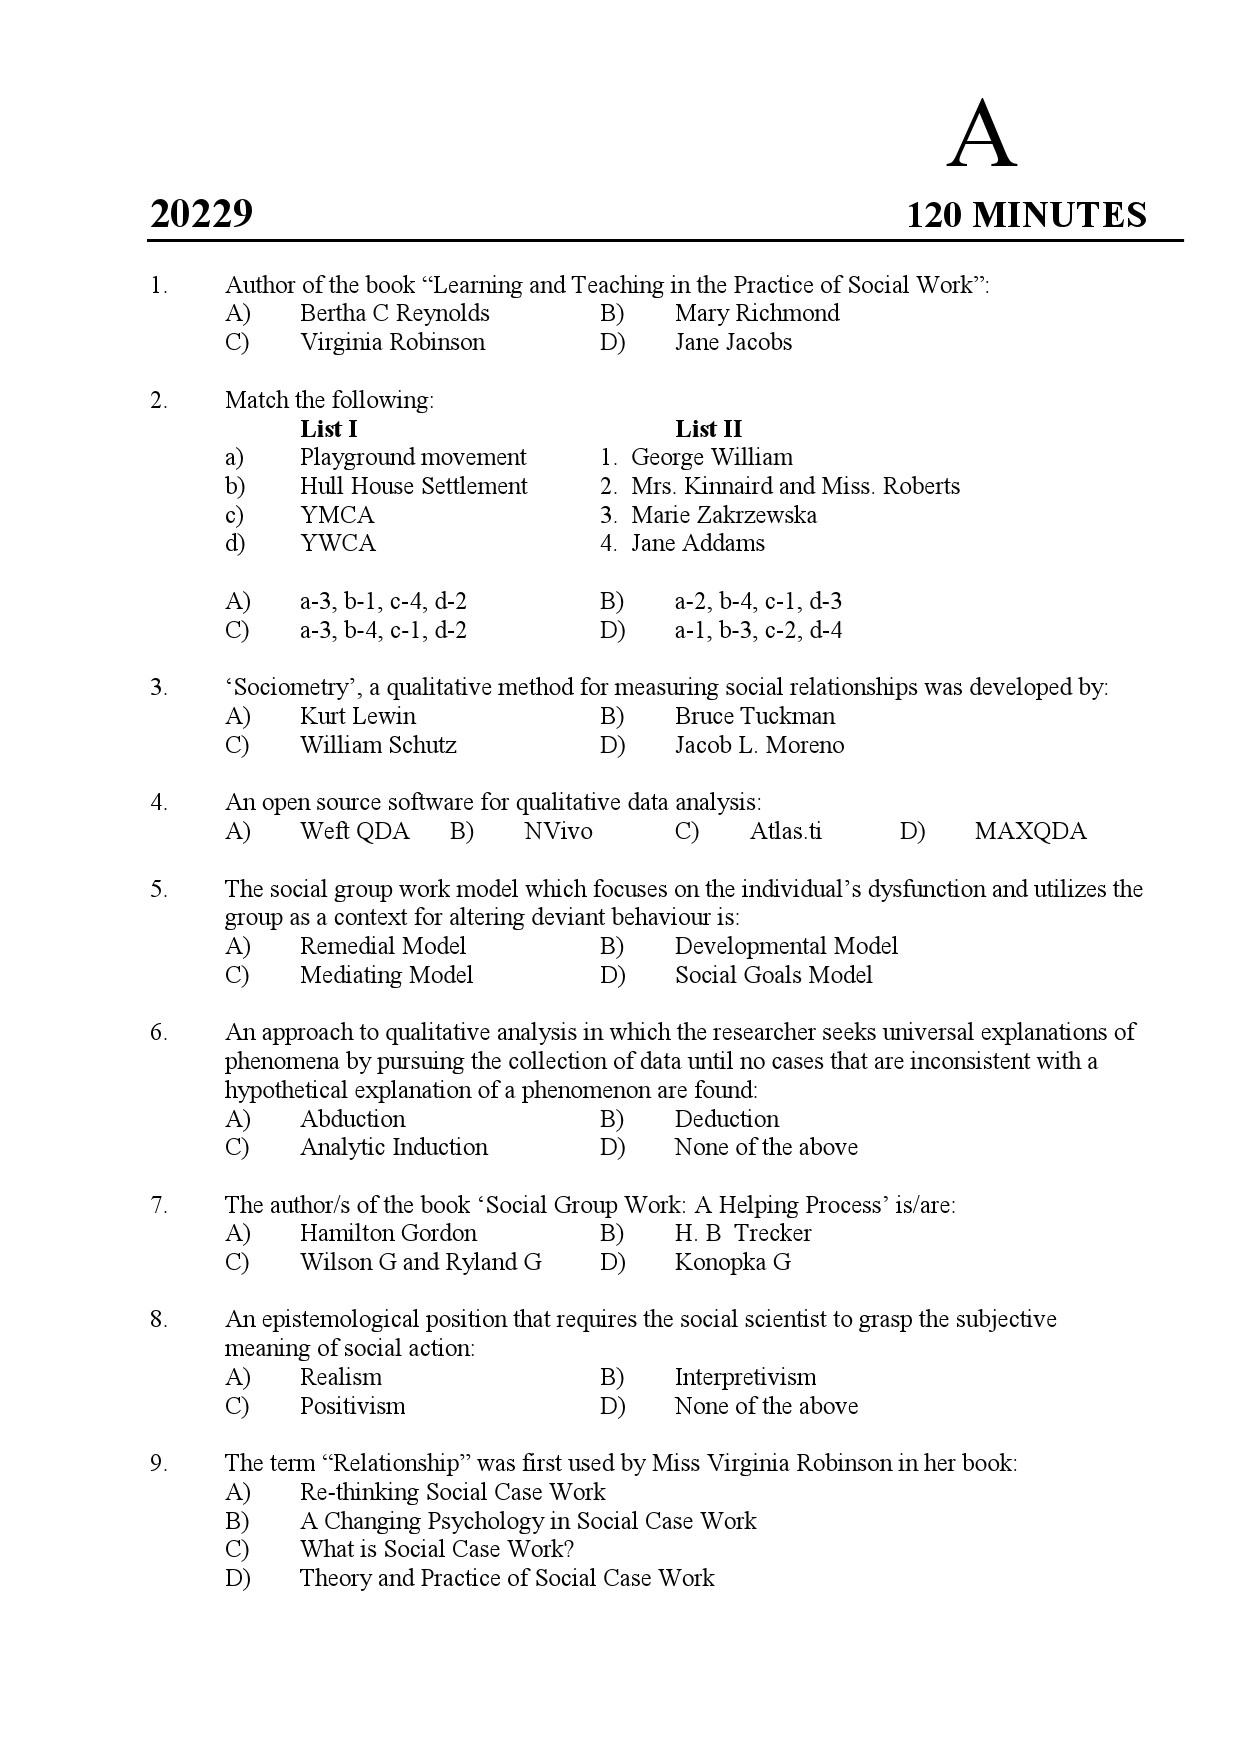 Kerala SET Social Work Exam Question Paper February 2020 1